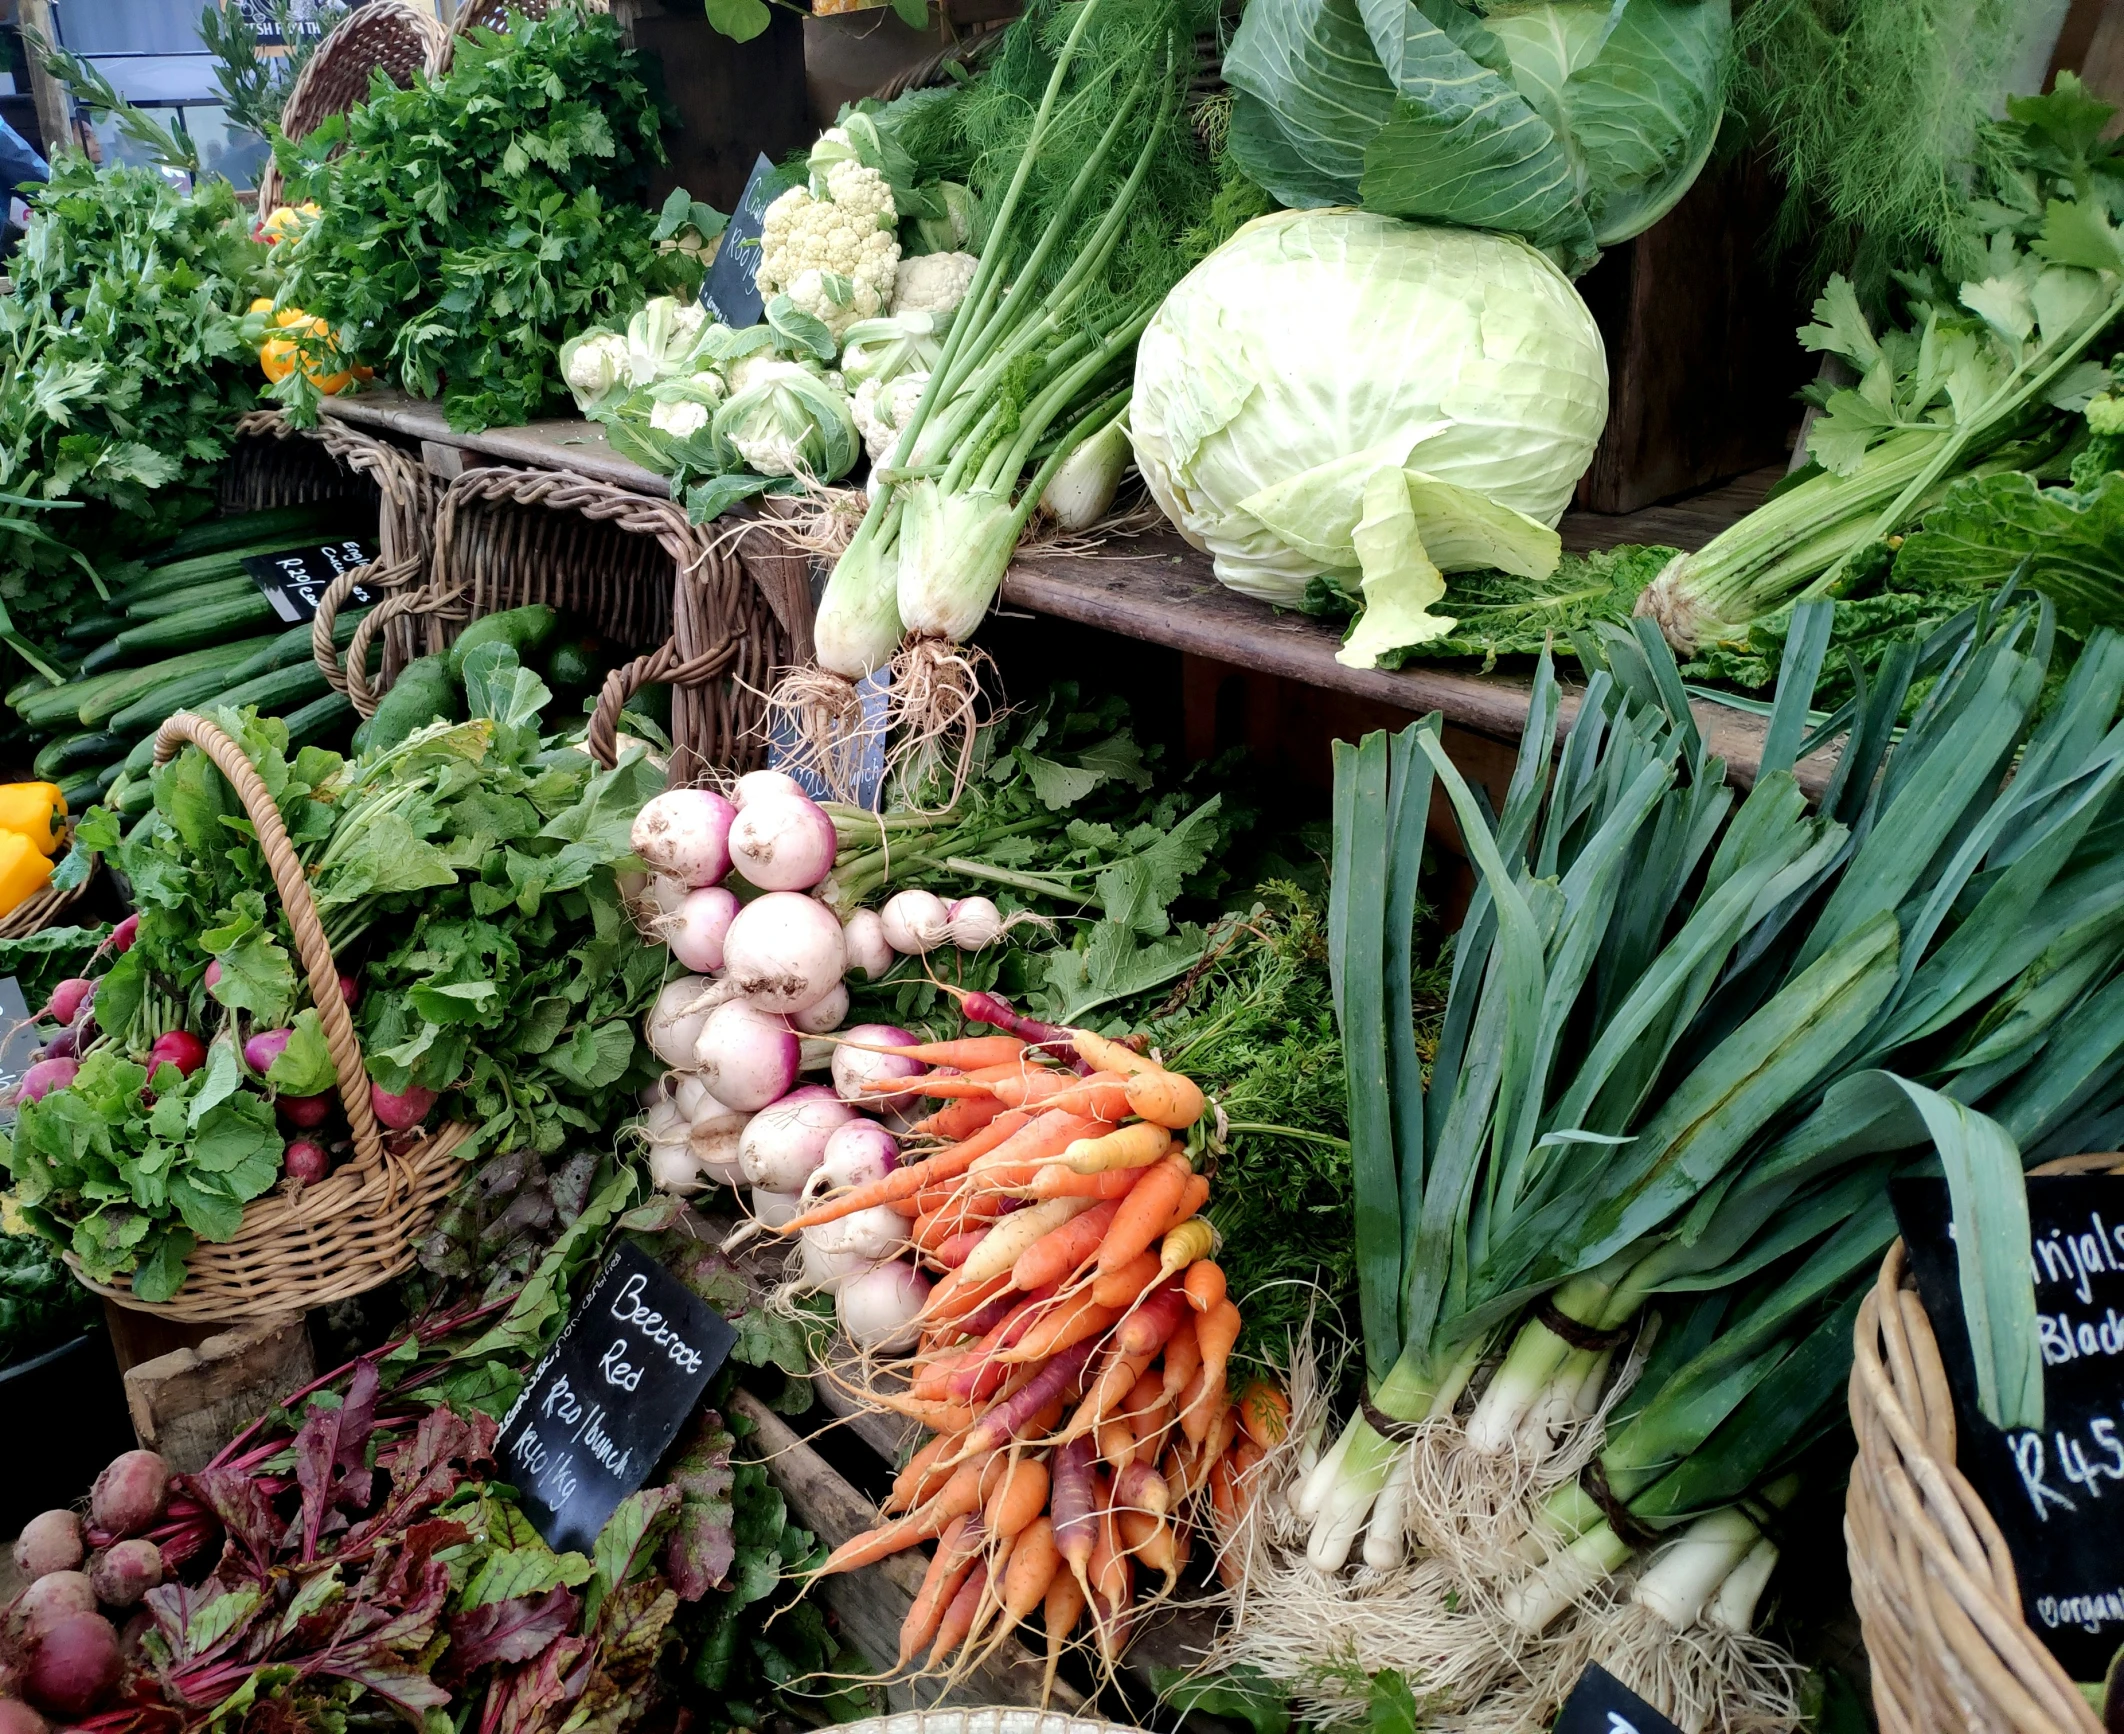 lots of fresh veggies at the farmer's market